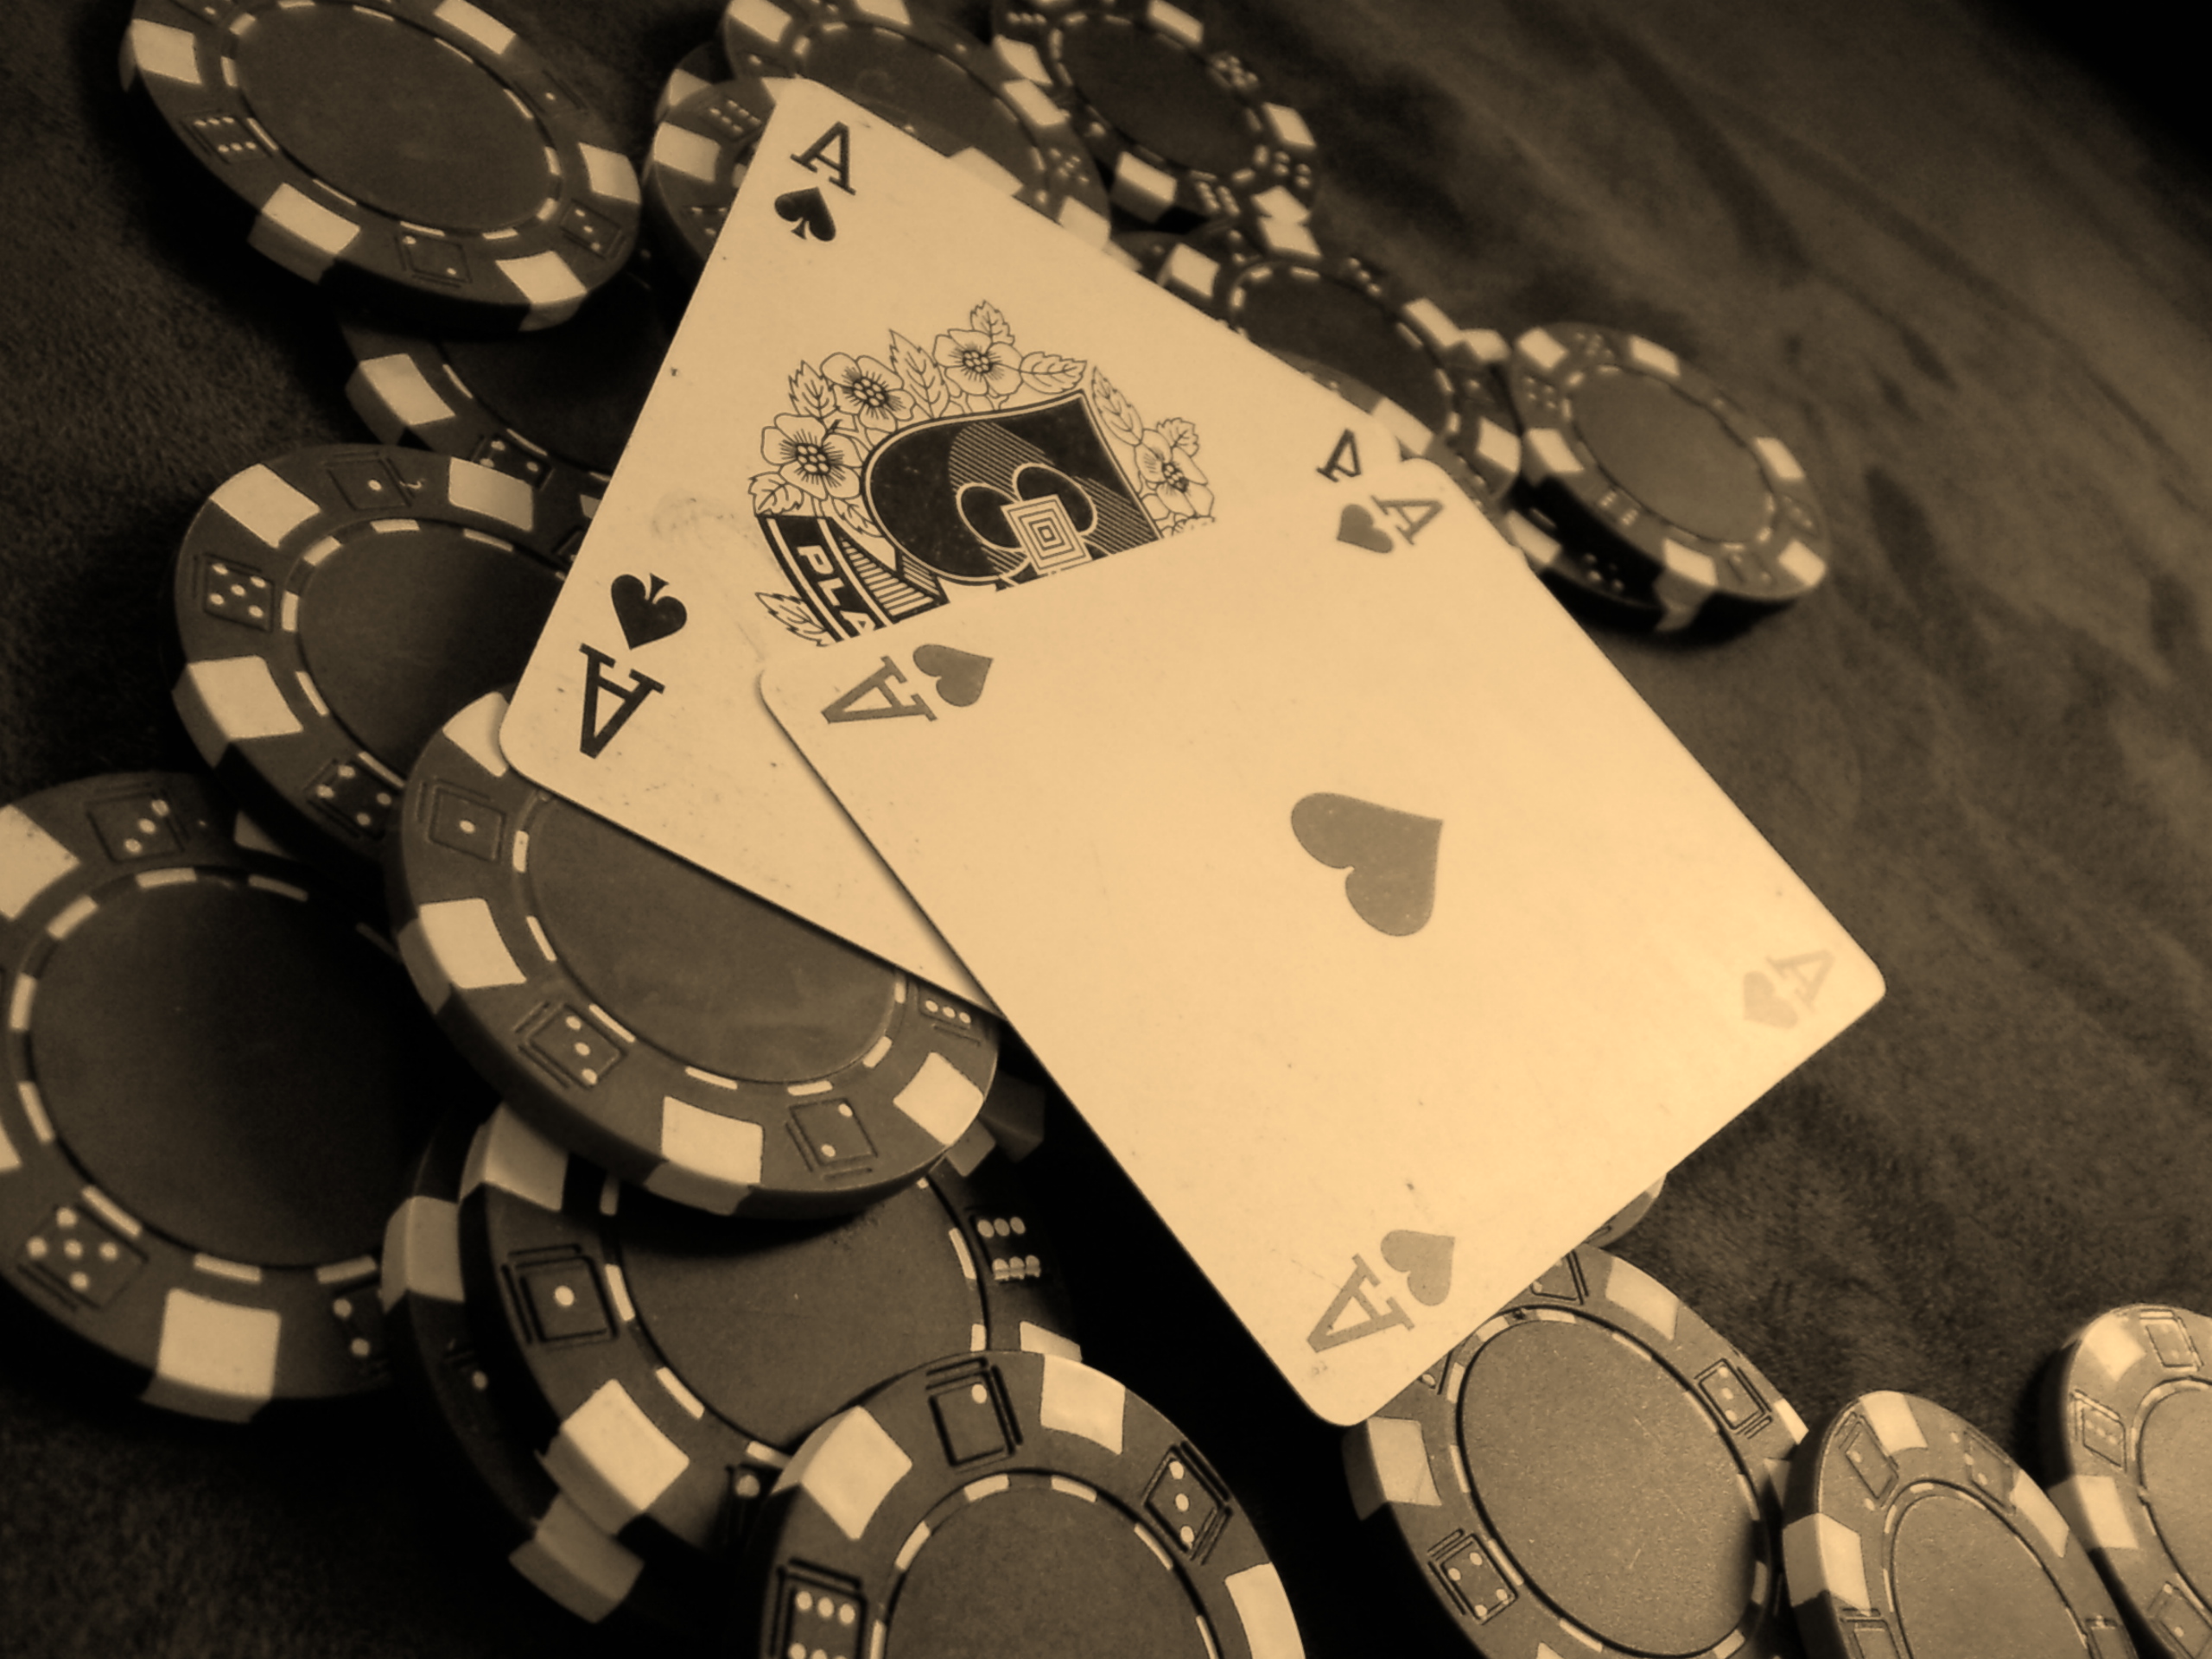 Free download Cards poker poker chips chips wallpaper 2560x1920 15579 [2560x1920] for your Desktop, Mobile & Tablet. Explore Poker Chips Wallpaper. Poker Chips Wallpaper, Poker Wallpaper, Chips Wallpaper